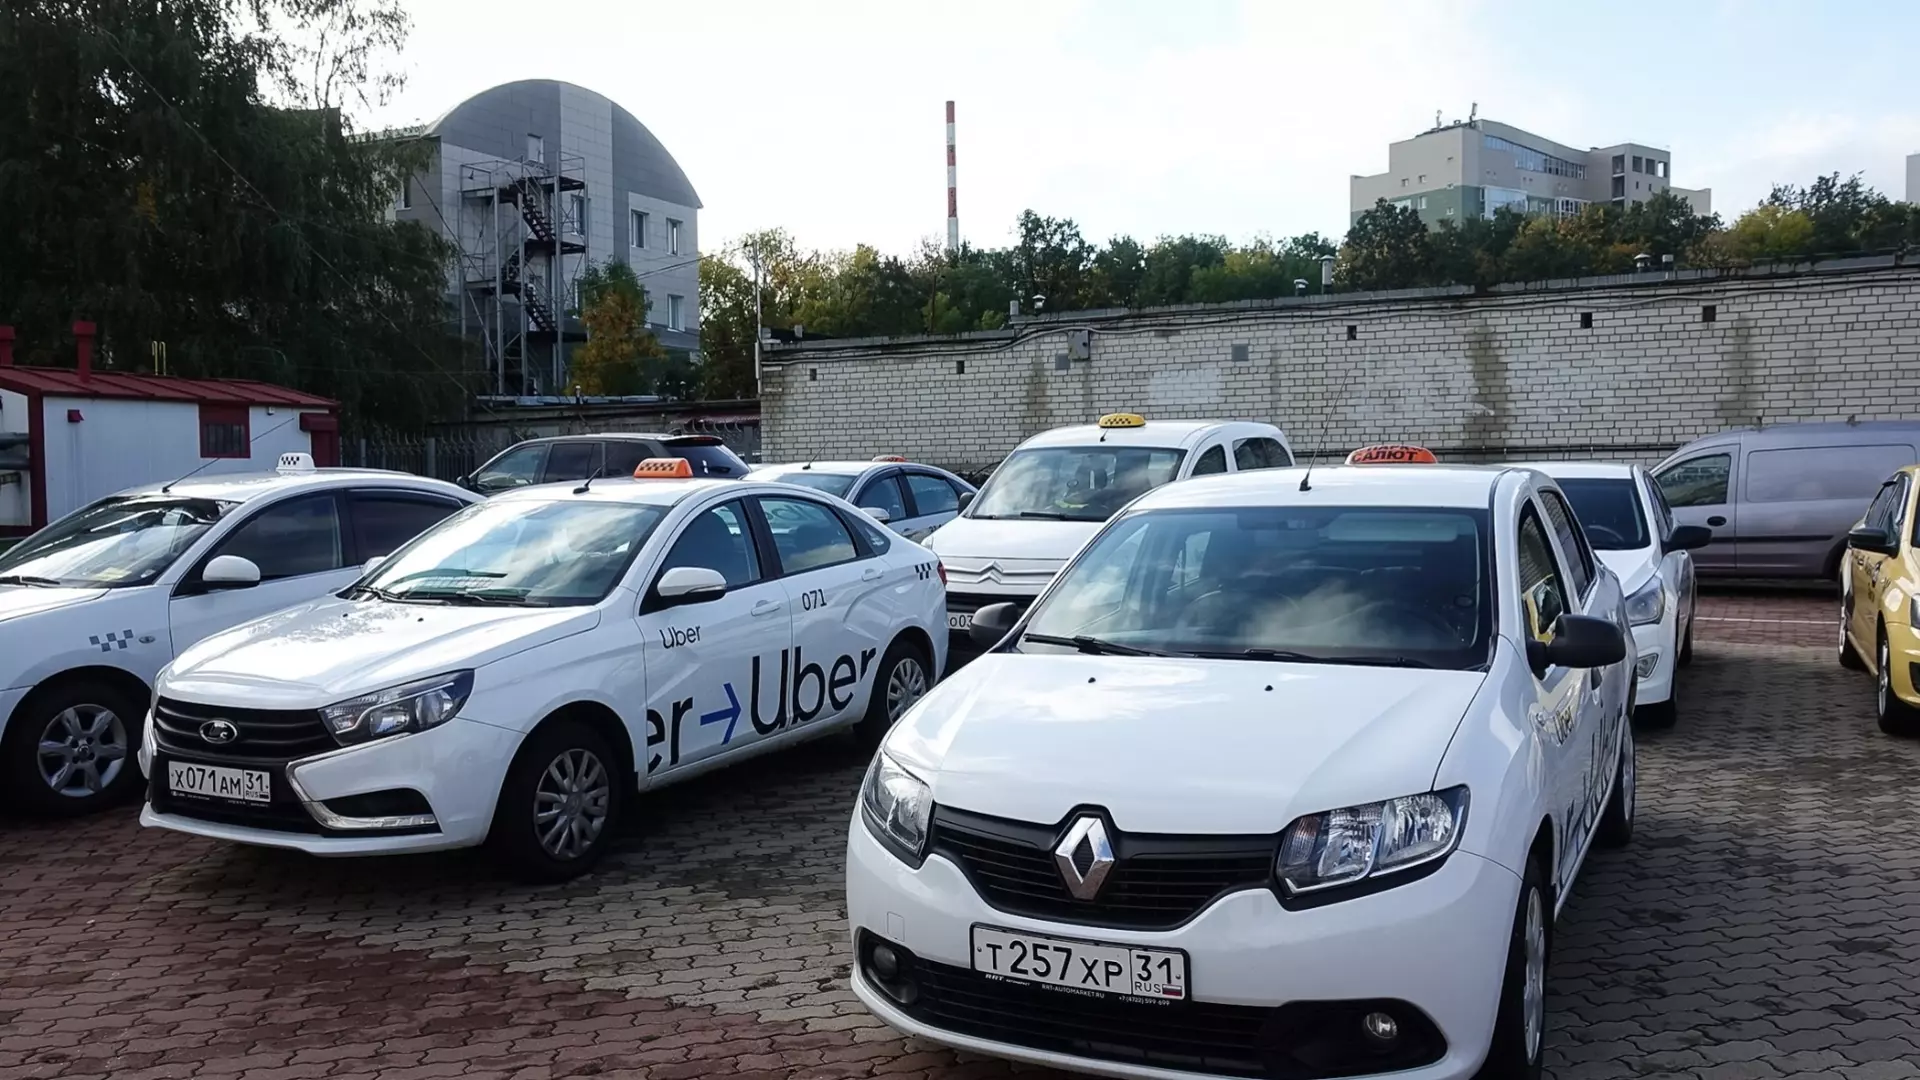 Разница между ценами на услуги такси в Ростове за год в Ростове составила 36%